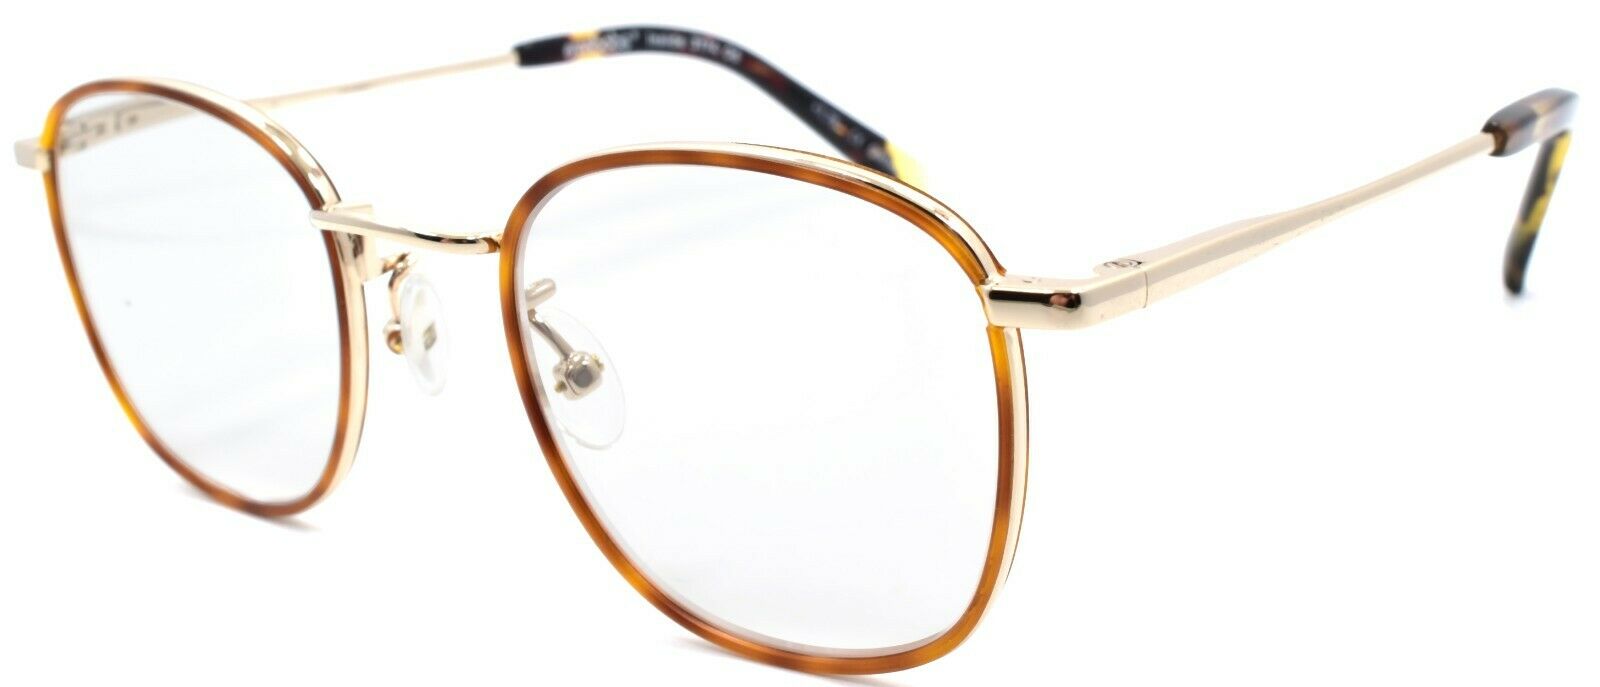 1-Eyebobs Inside 3174 06 Unisex Reading Glasses Orange Tortoise / Gold +1.75-842754169592-IKSpecs